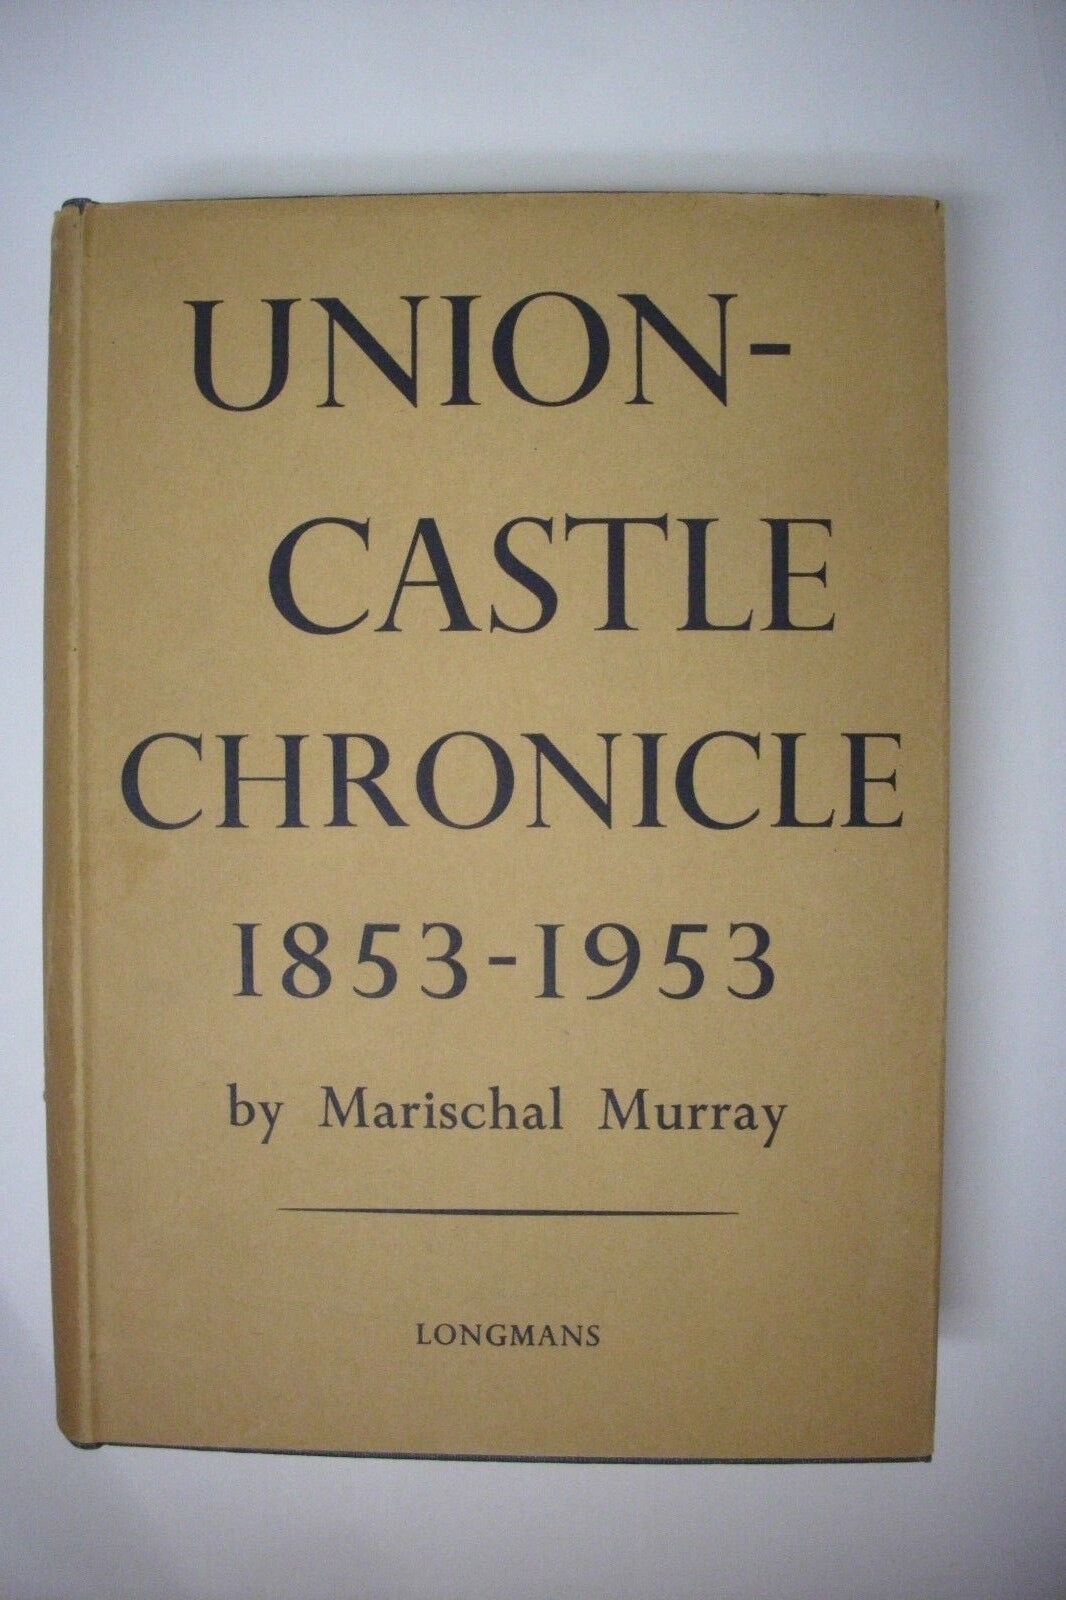 UNION-CASTLE CHRONICLE 1853 - 1953 - Shipping-Merchant Fleet-Africa-ILLUSTRATED